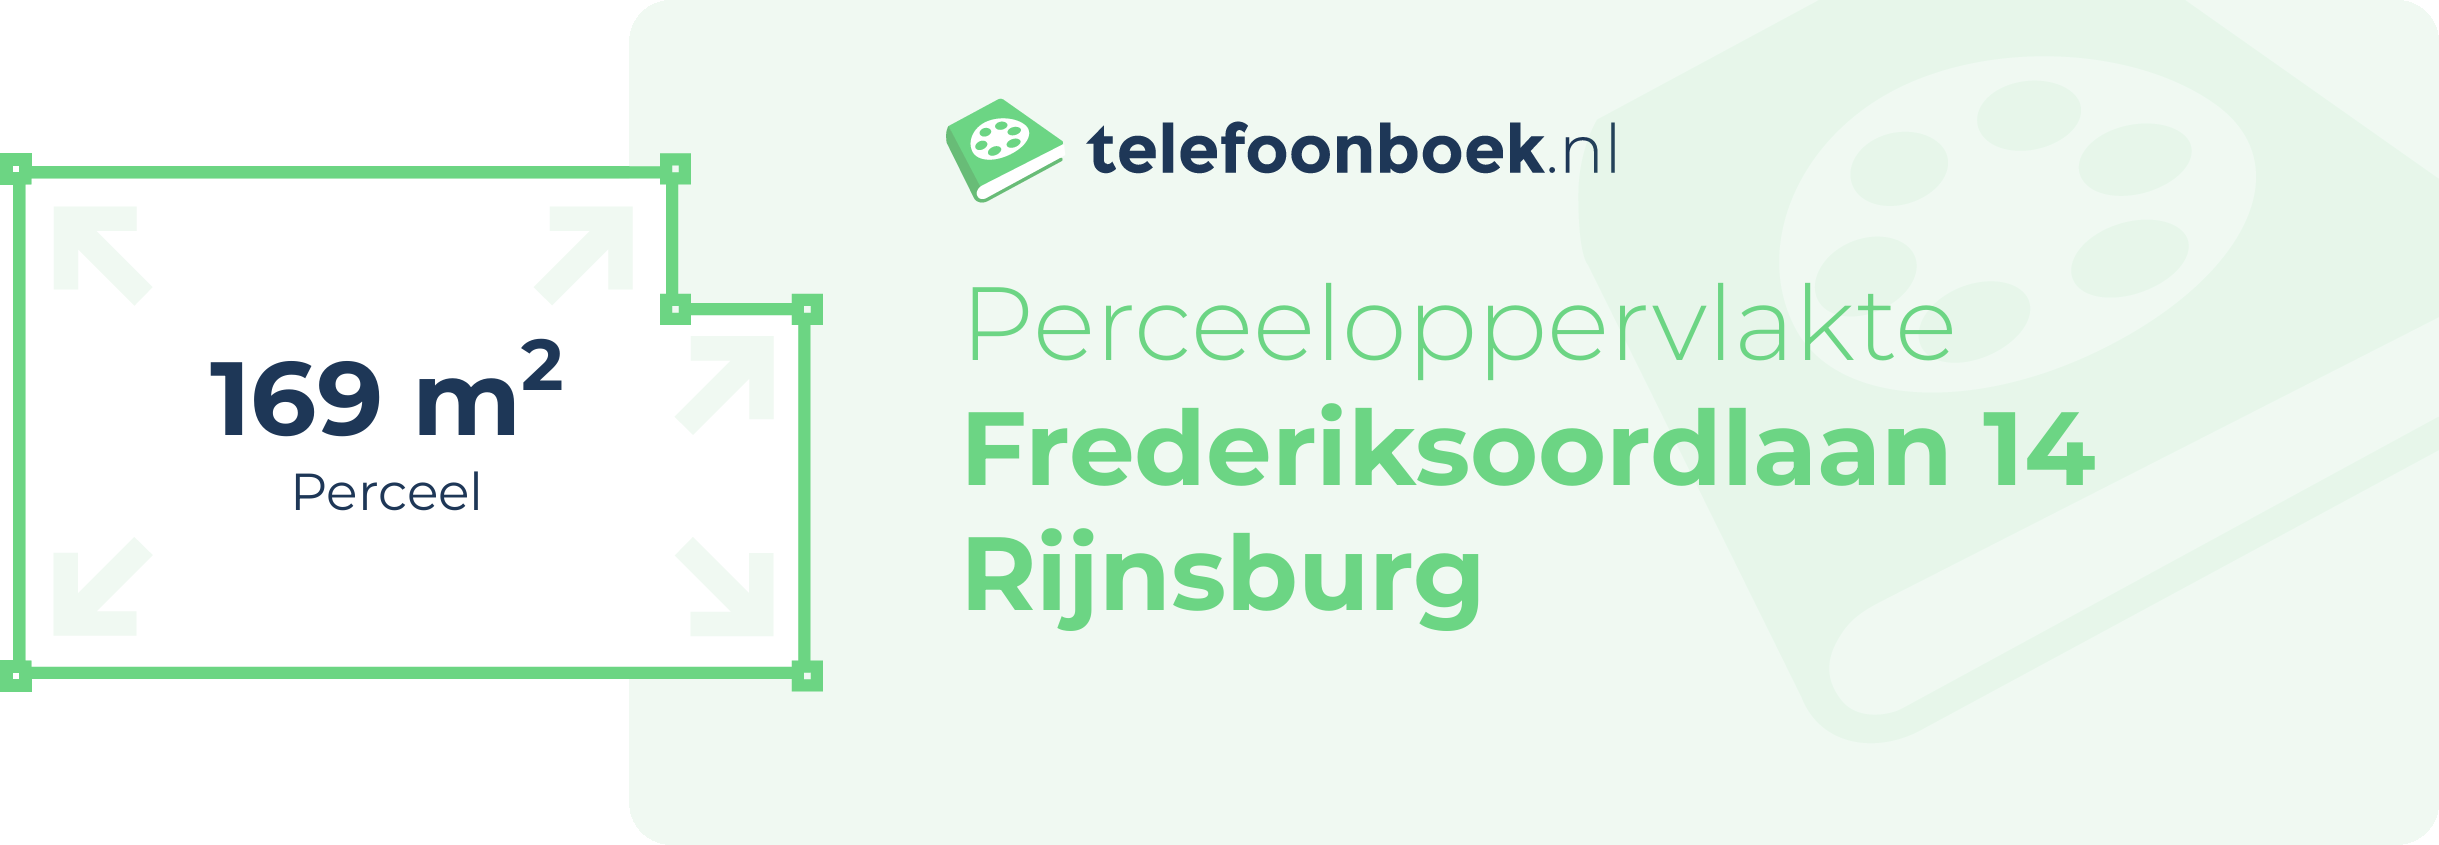 Perceeloppervlakte Frederiksoordlaan 14 Rijnsburg